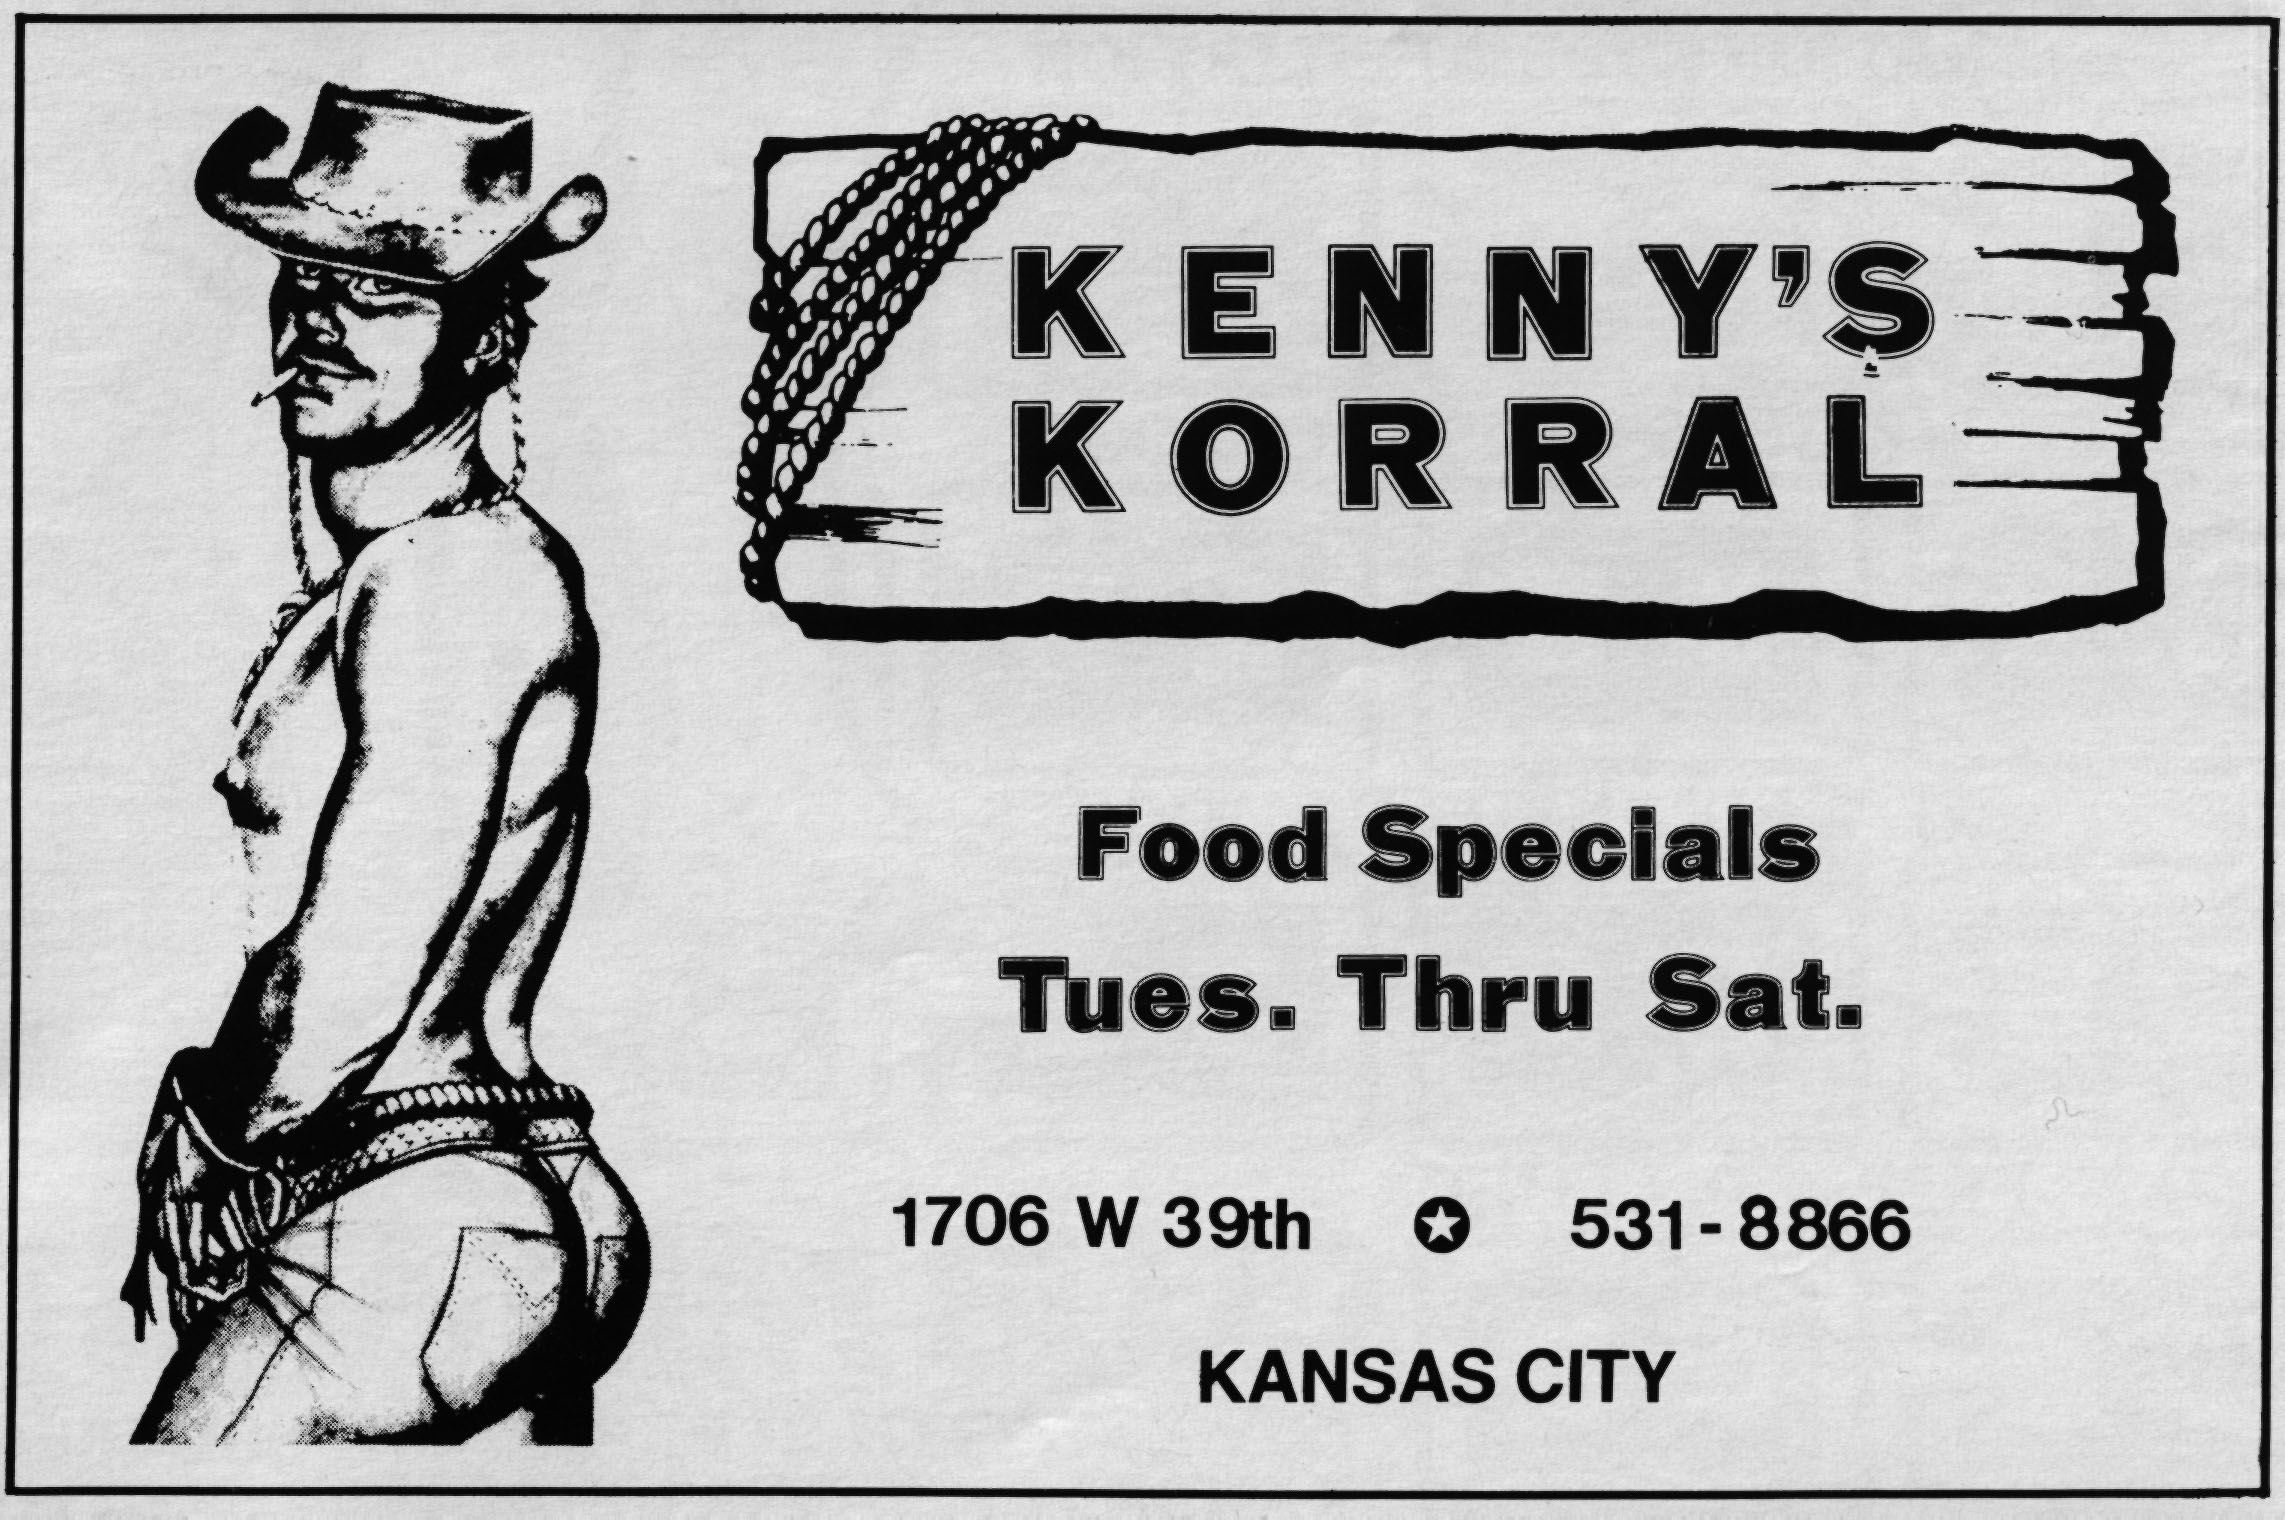 Kenny's Korral logo/ad